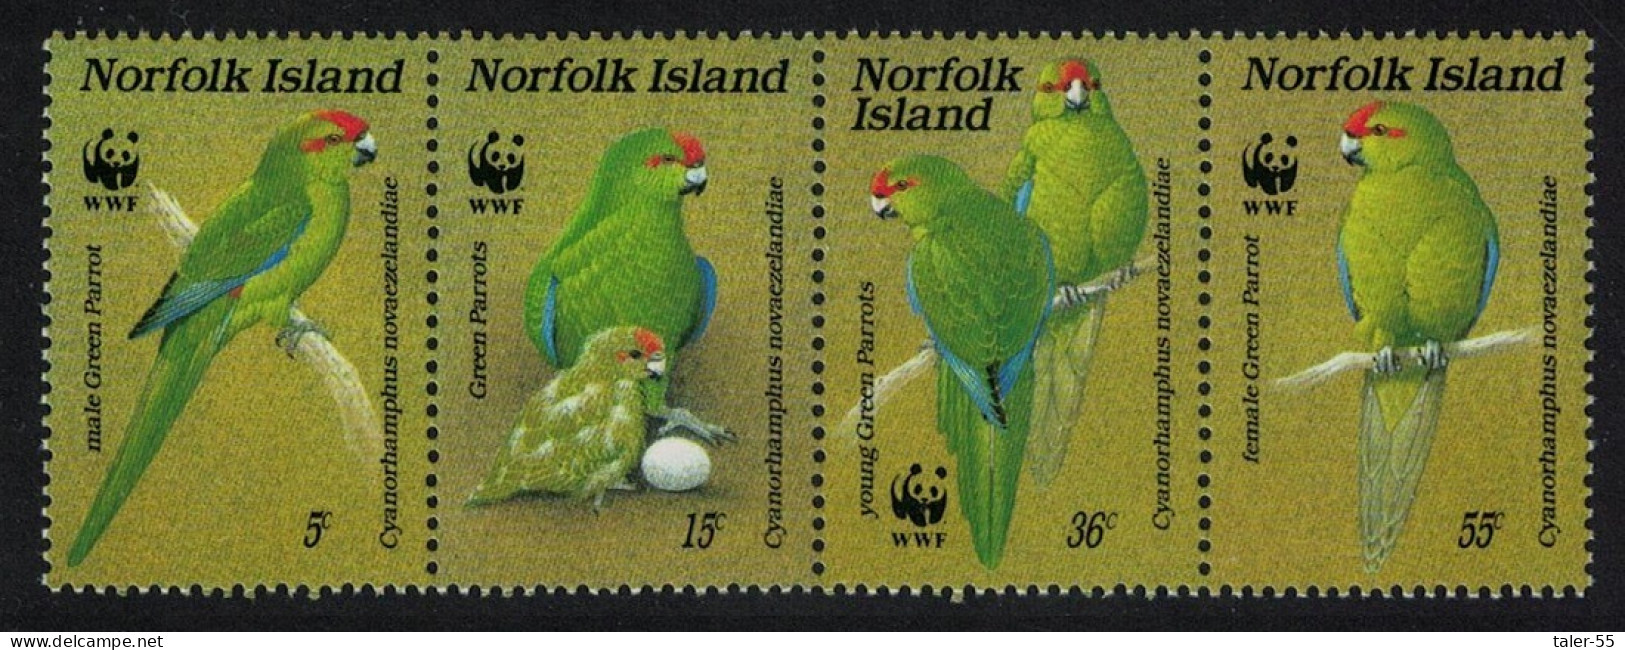 Norfolk Birds WWF Green Parrot Strip Of 4v 1987 MNH SG#425-428 MI#421-424 Sc#421 A-d - Norfolkinsel